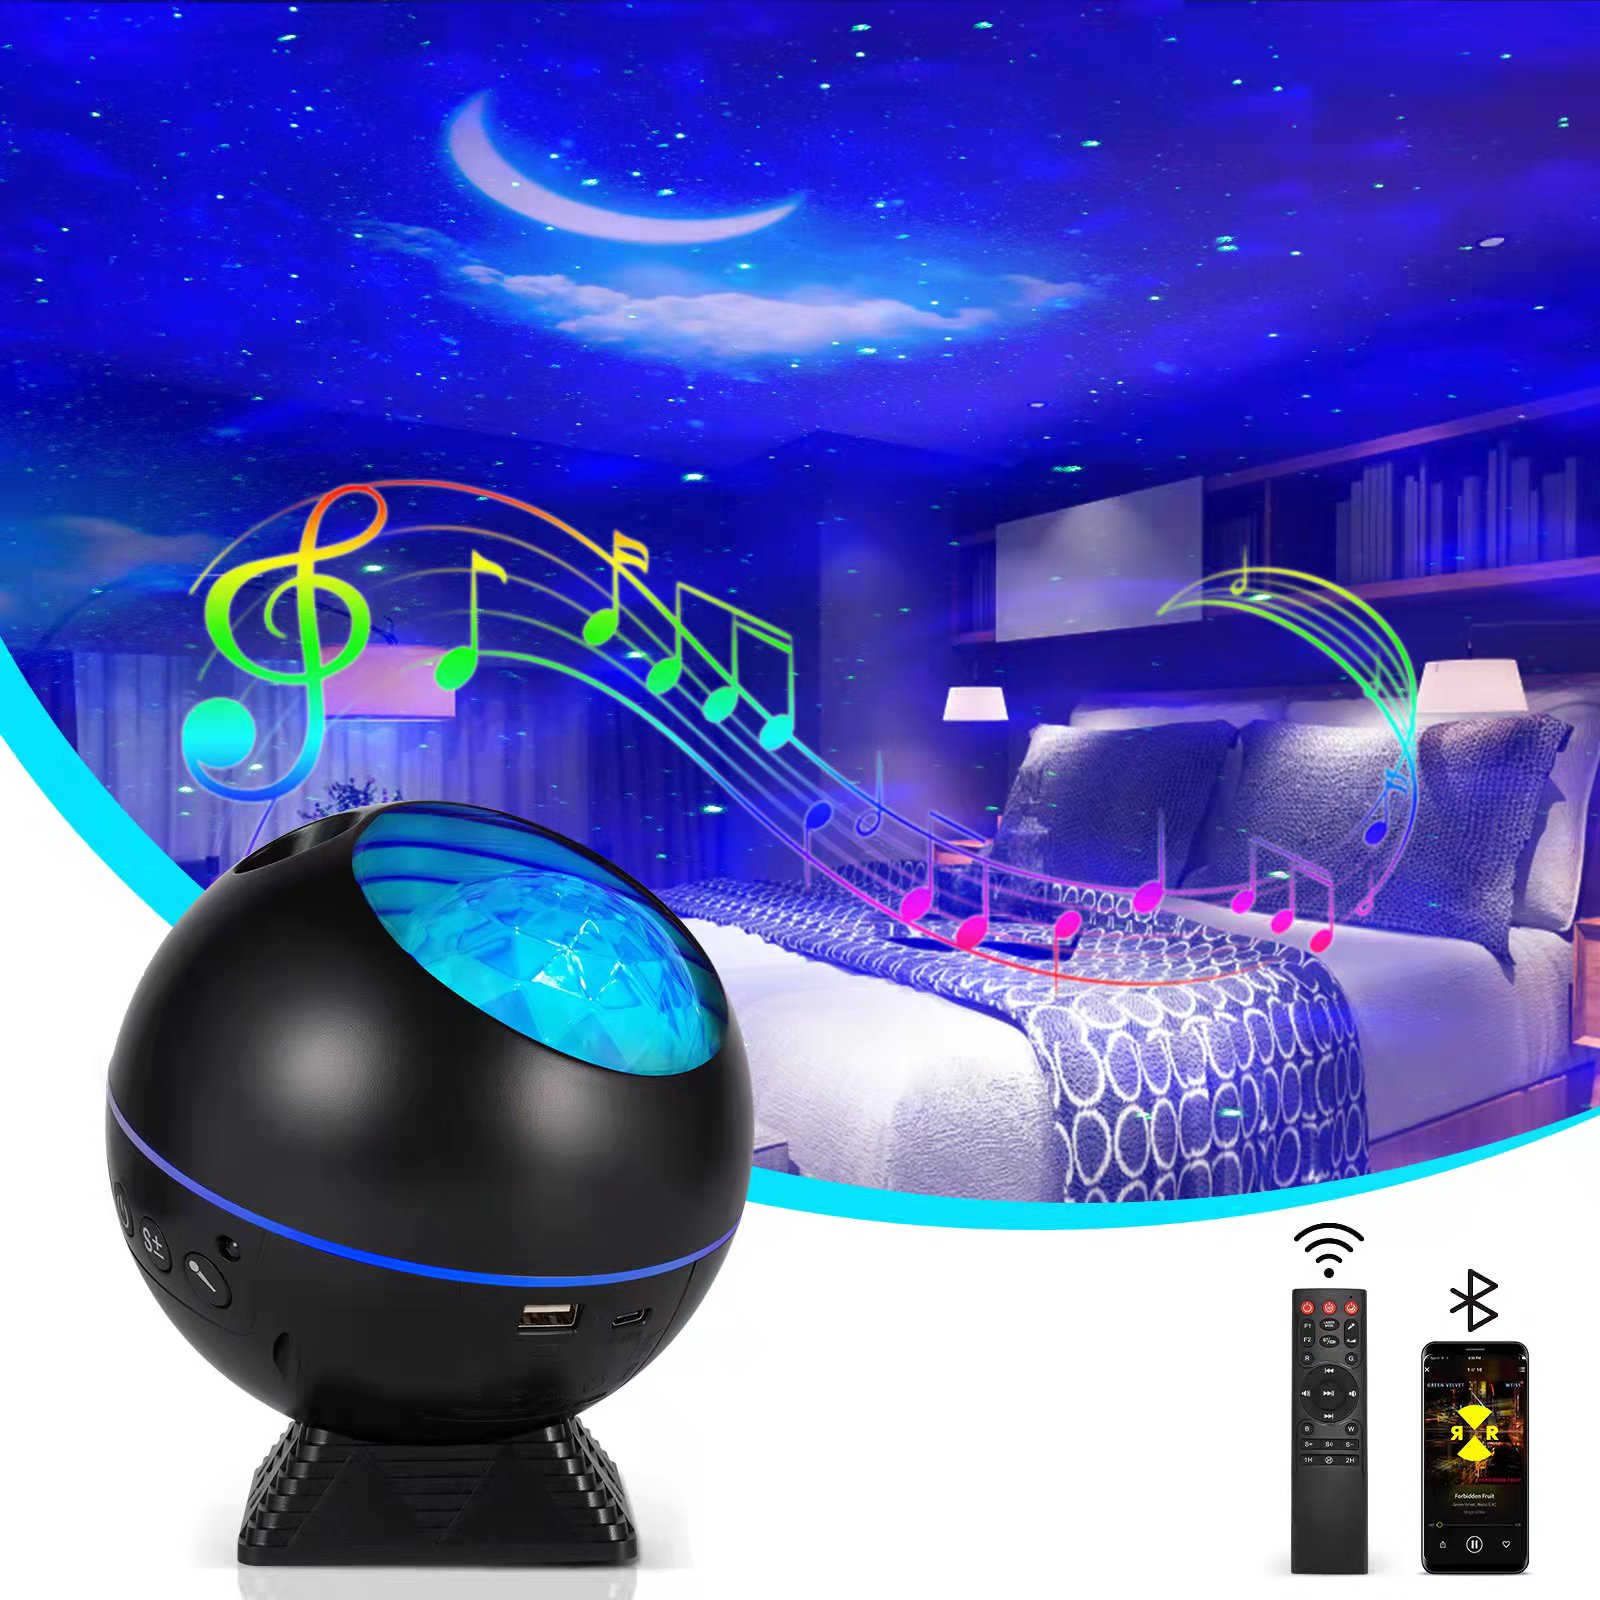 Projetor Star, Galaxy projetor Night Light alto-falante estéreo Bluetooth integrado, lâmpada LED Nebulosa Starry Sky Cloud Moon projetor com controle remoto